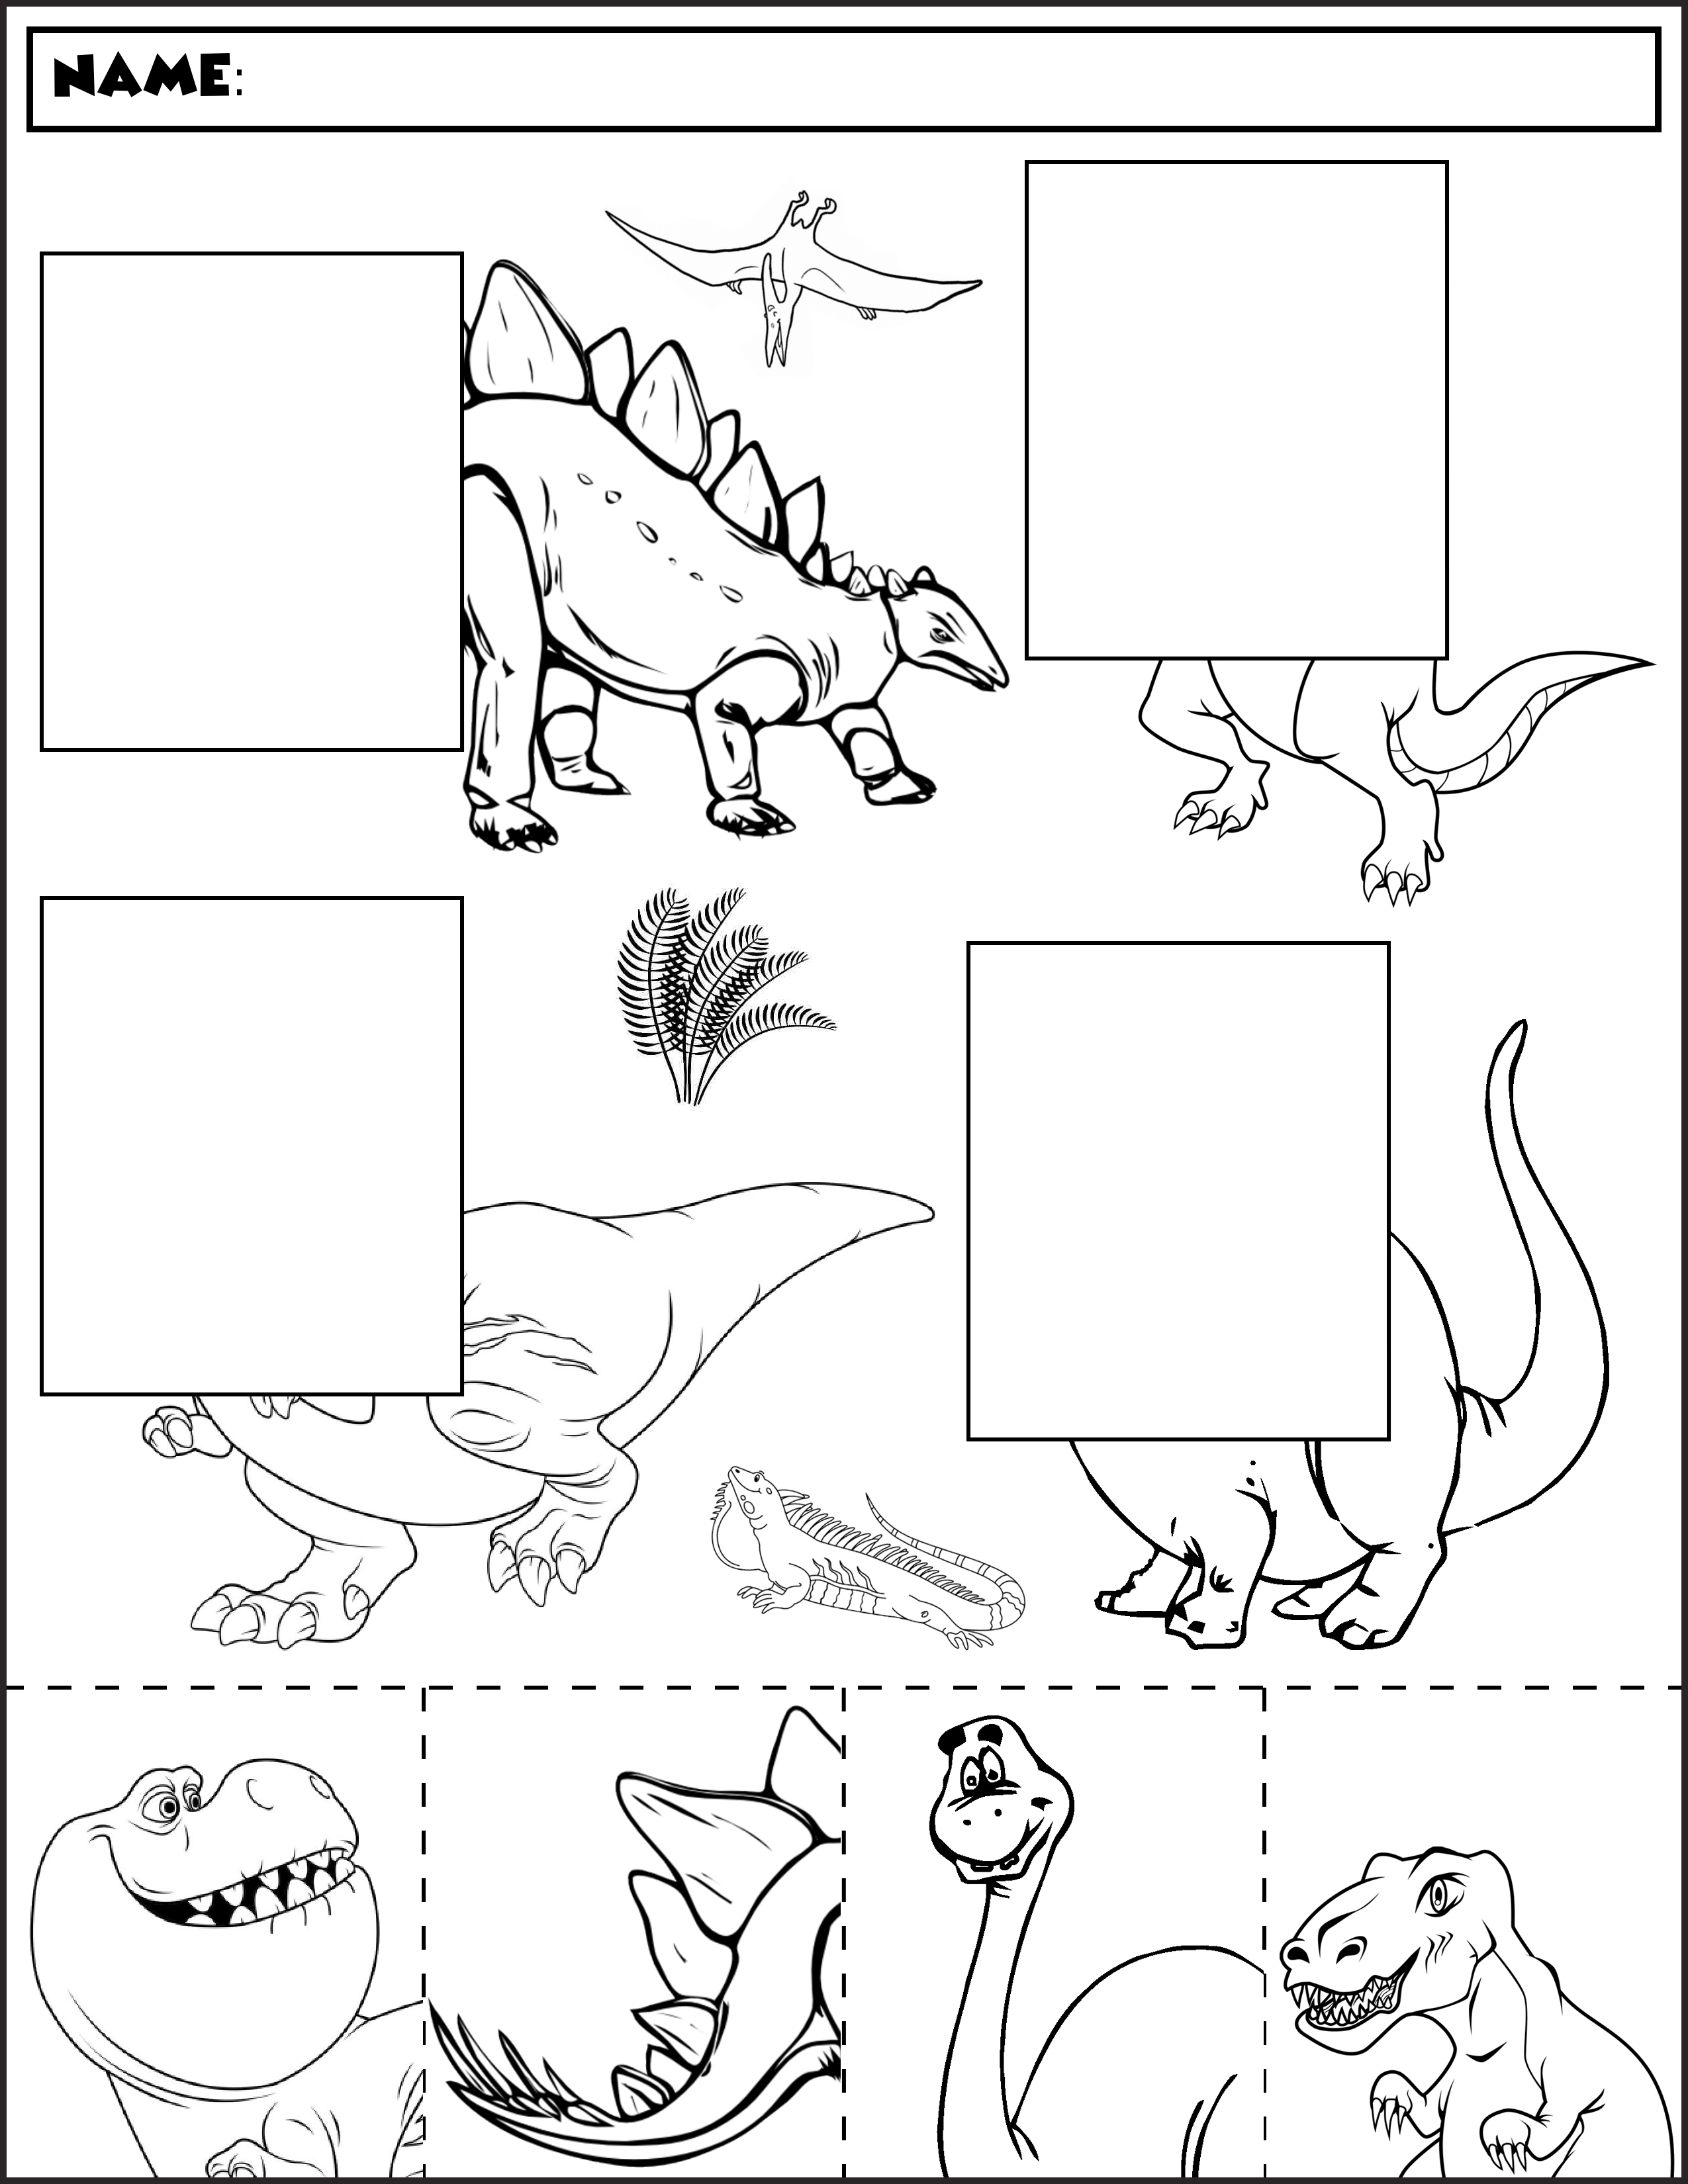 Kindergarten Dinosaur Worksheets